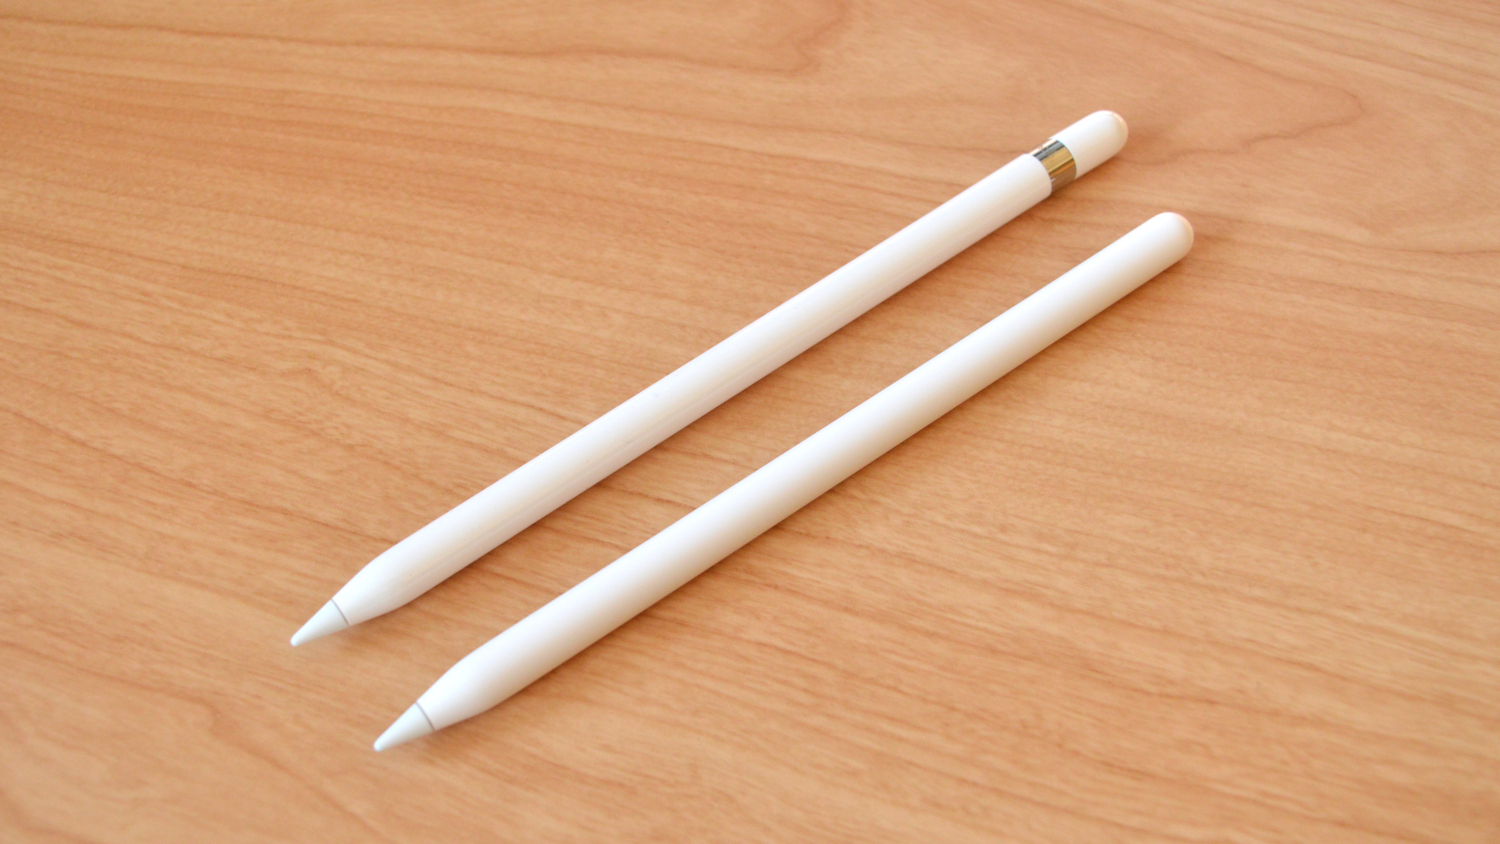 Apple Pencil 2 Review: Everyone's New iPad Sidekick